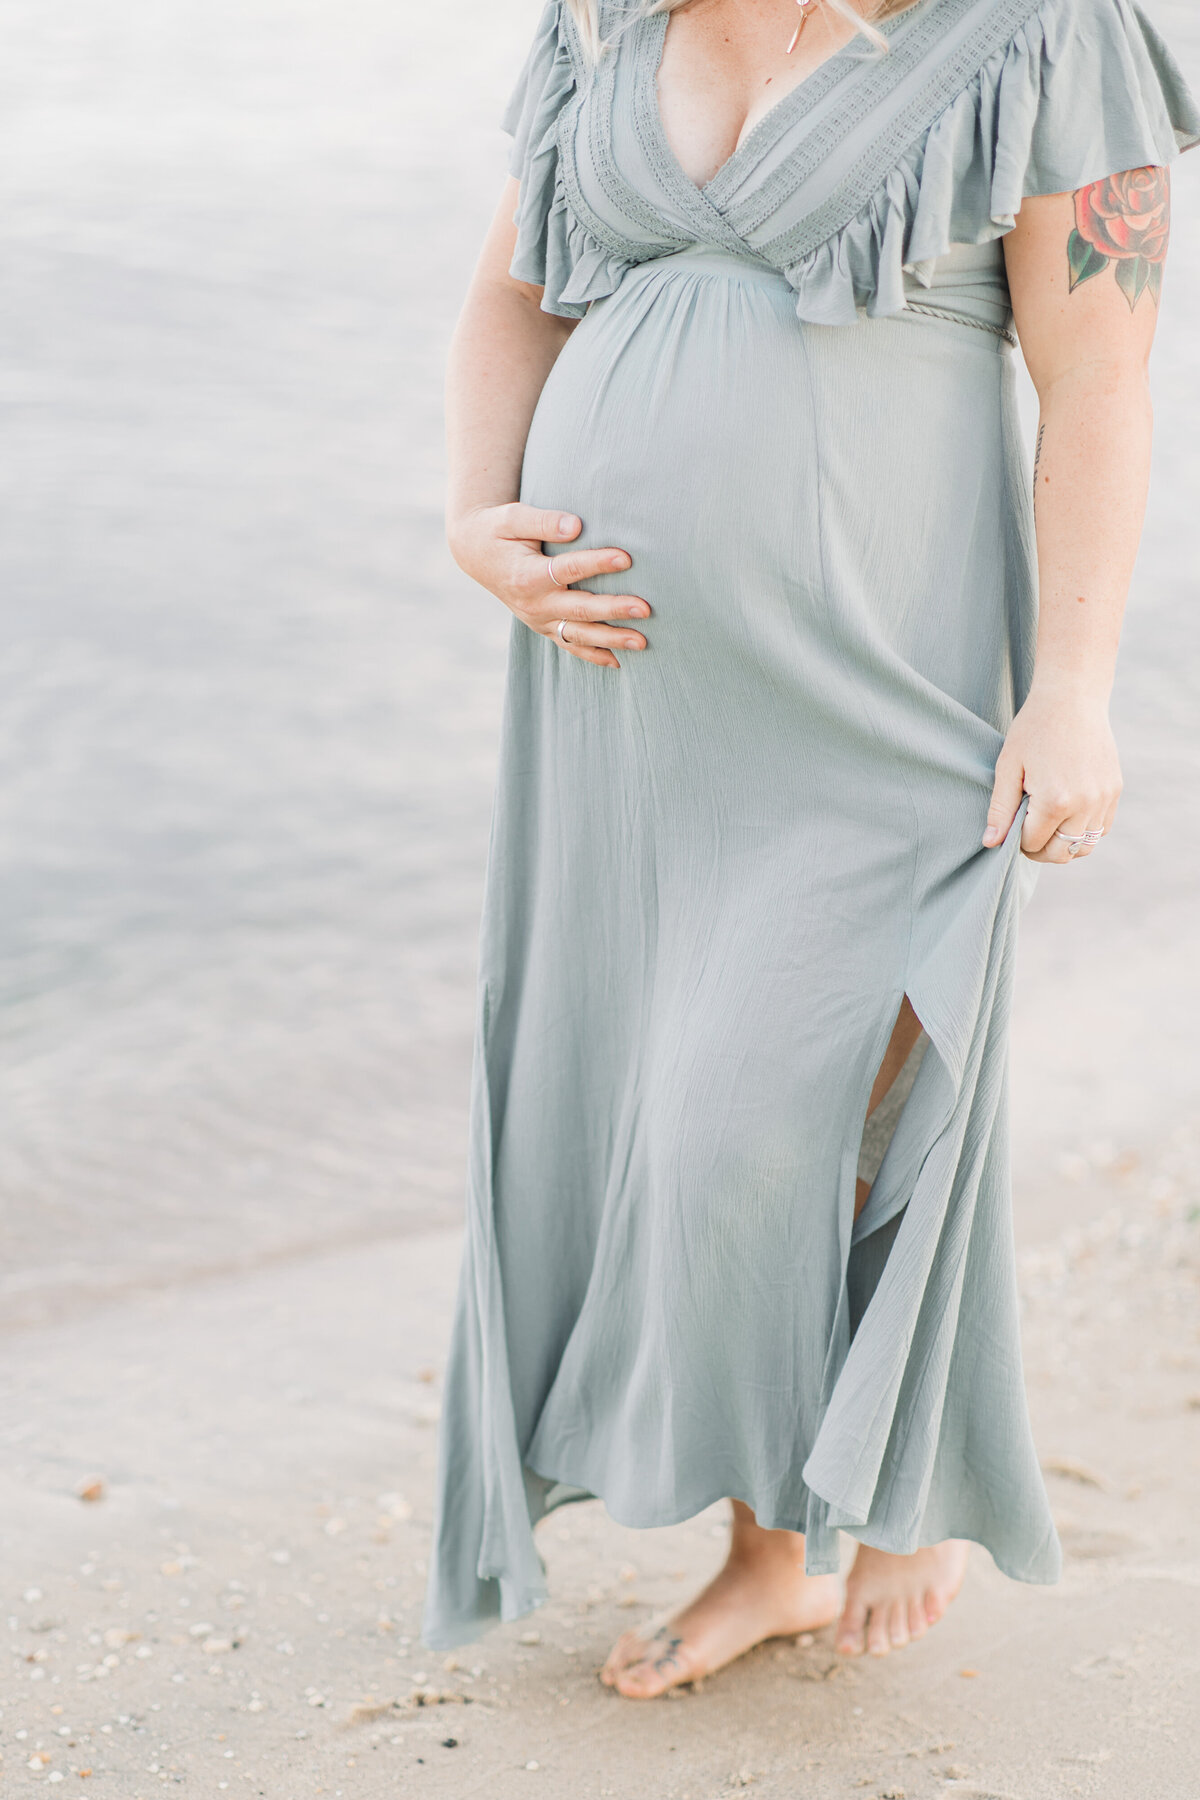 Kaley Brown Maternity Blog-79